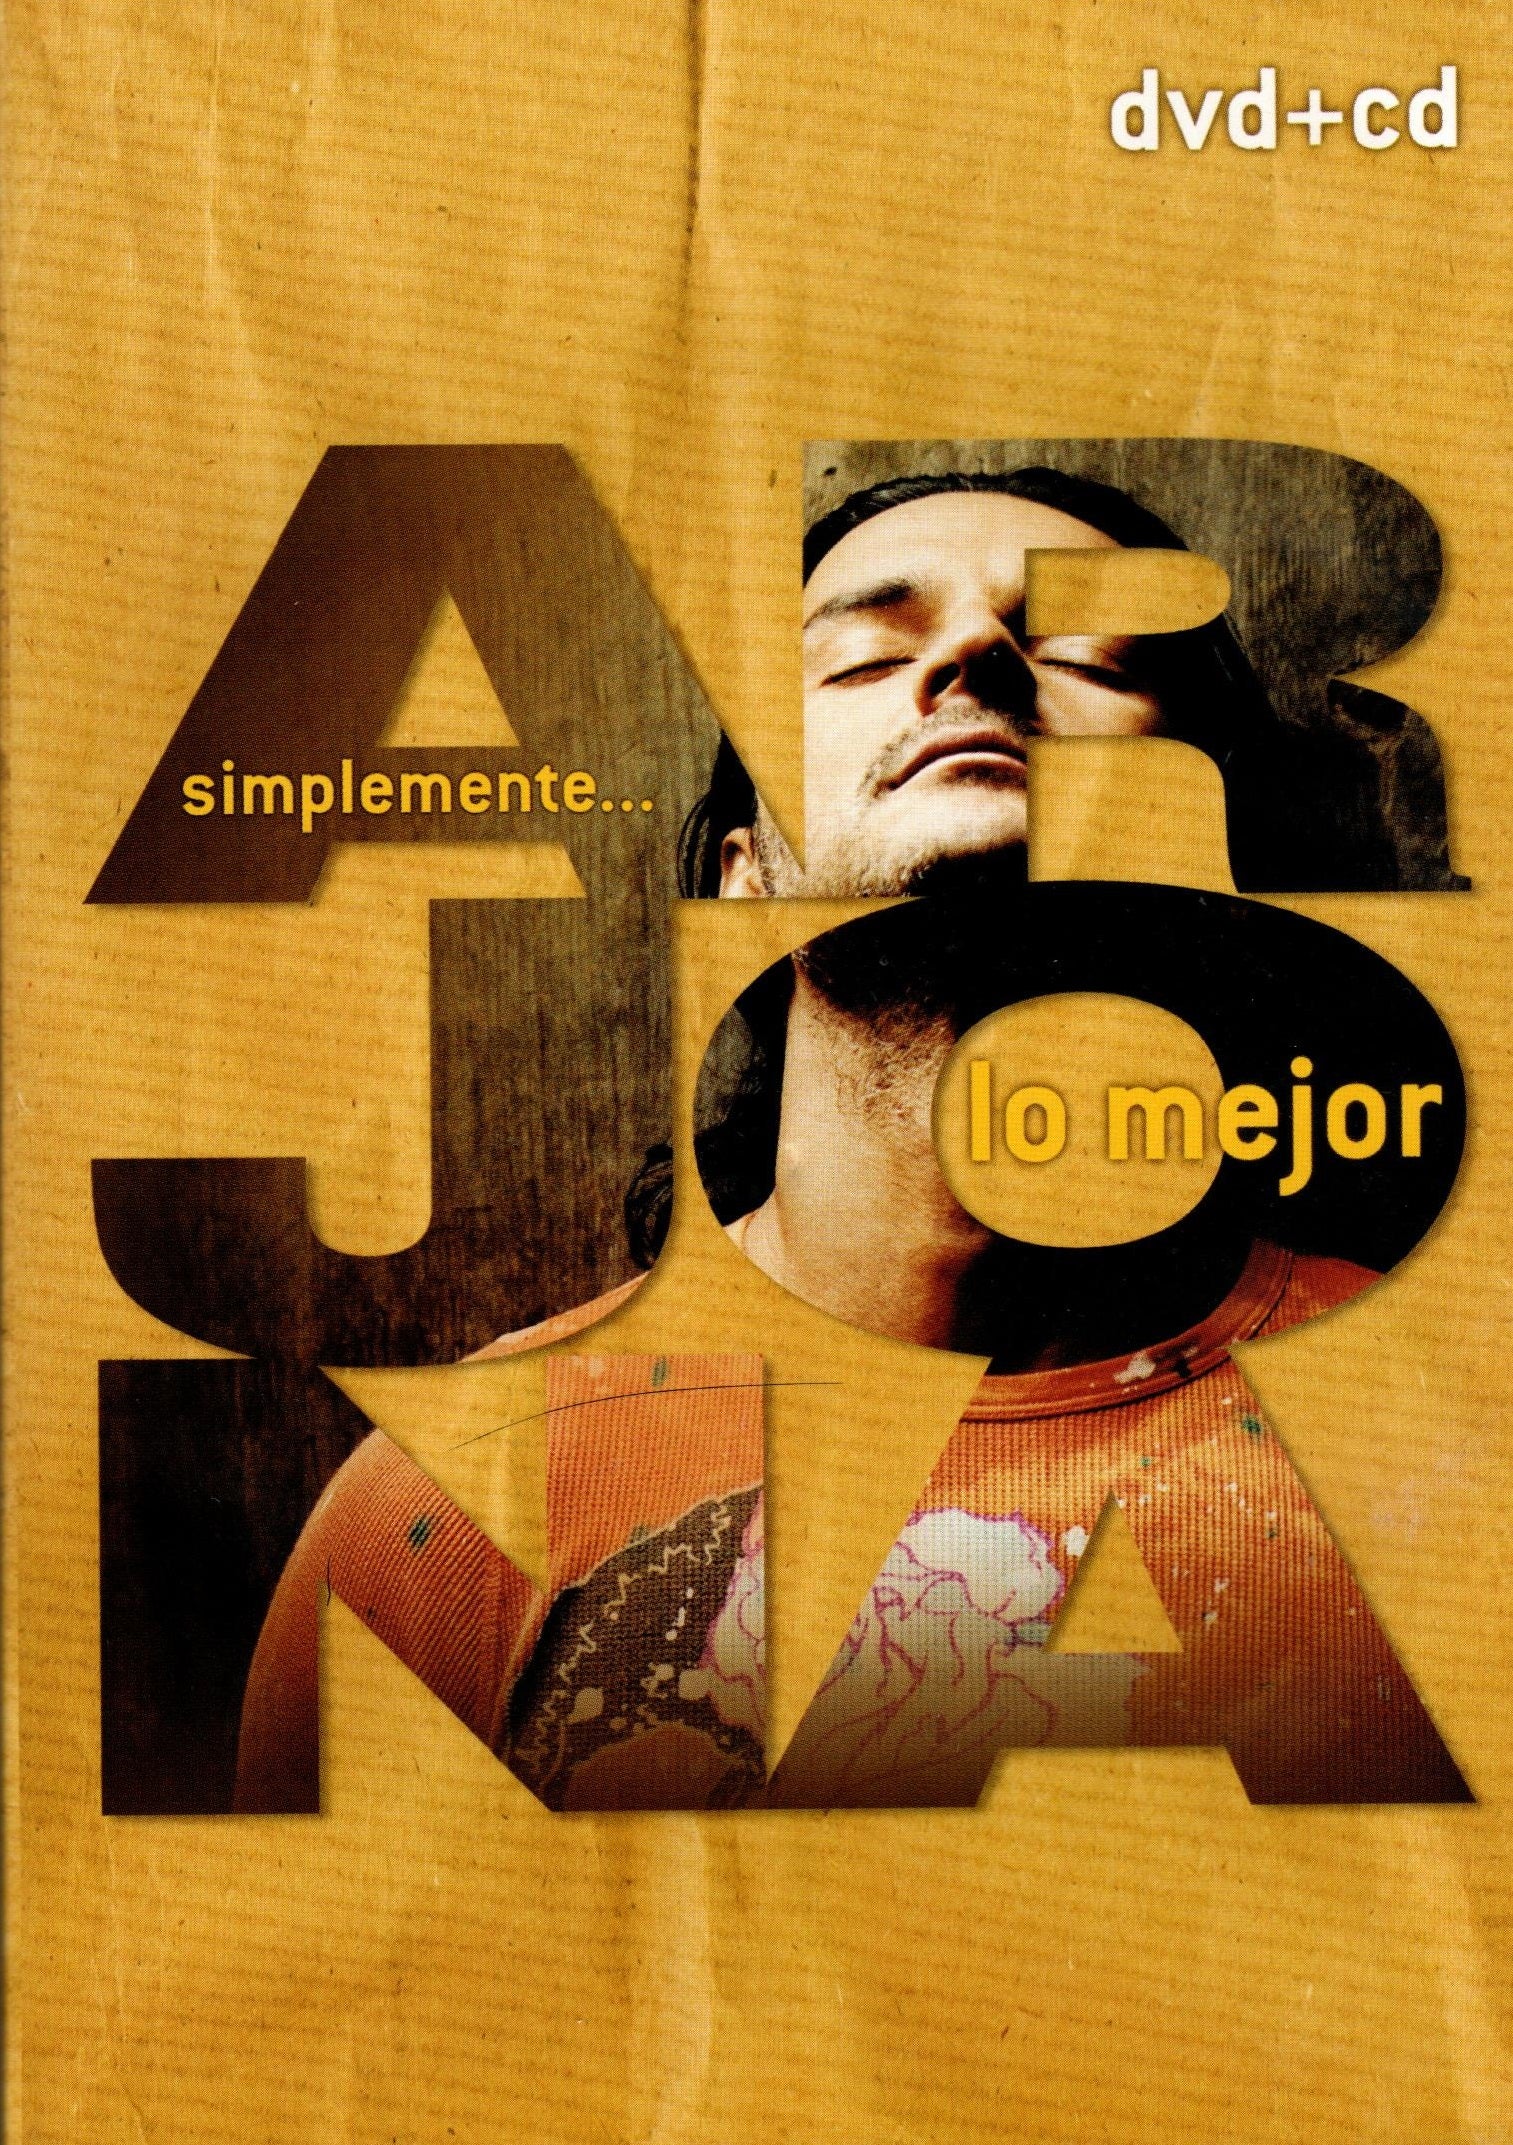 DVD+CD SIMPLEMENTE LO MEJOR / RICARDO ARJONA